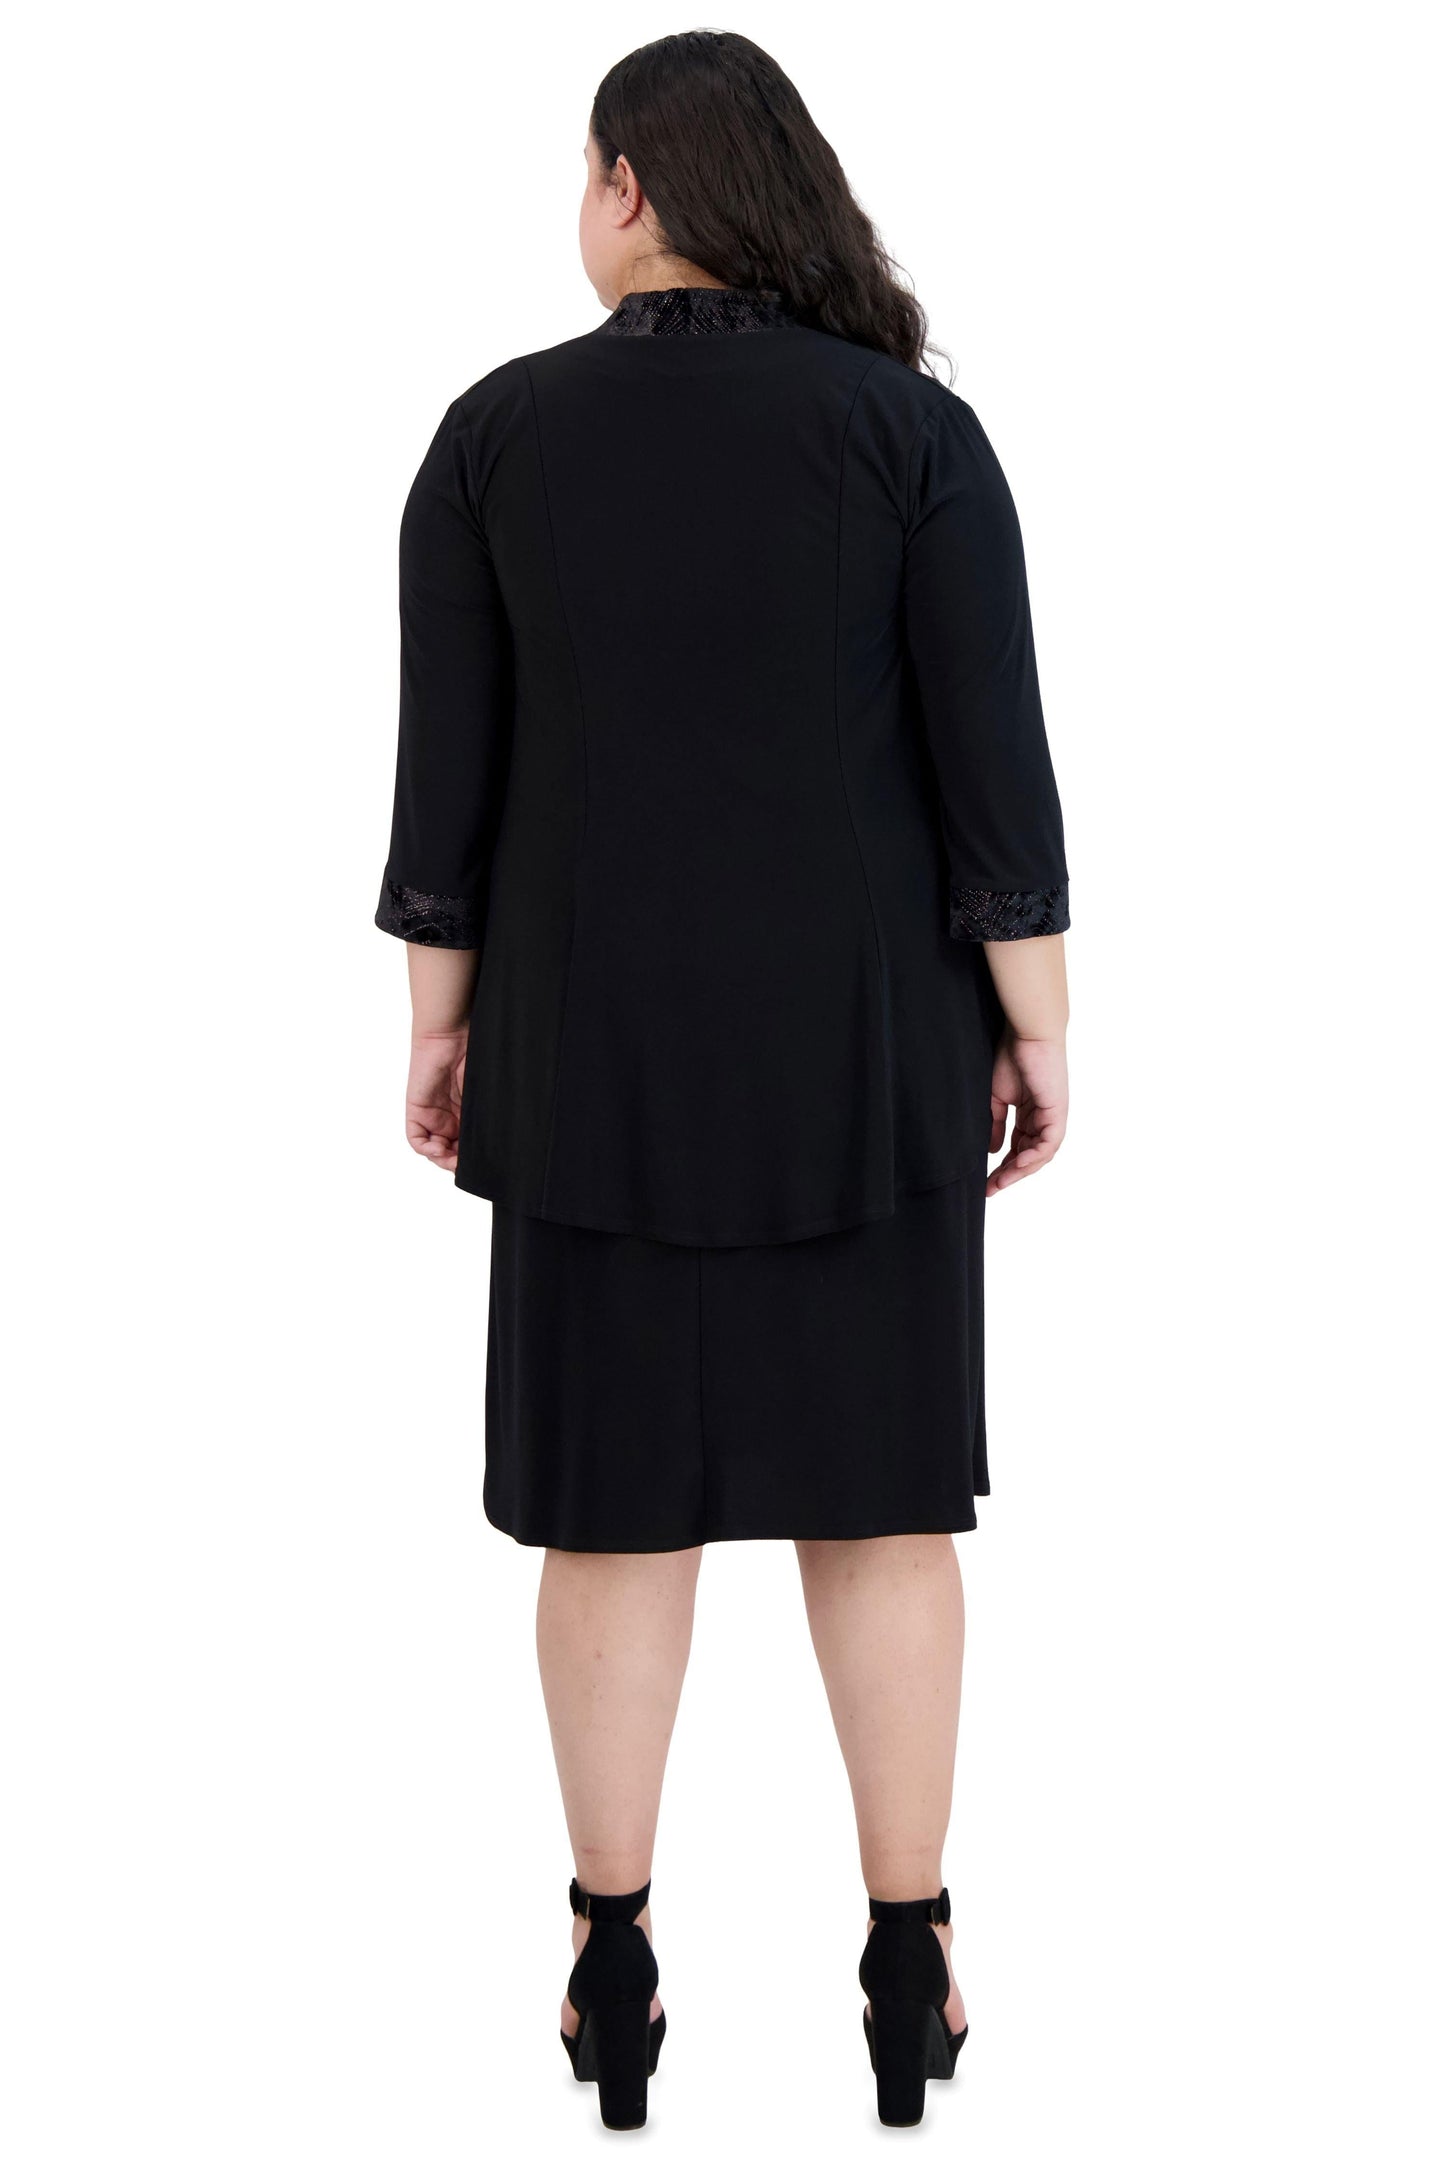 R&M Richards Short Plus Sie Two Piece Dress  9205W - The Dress Outlet